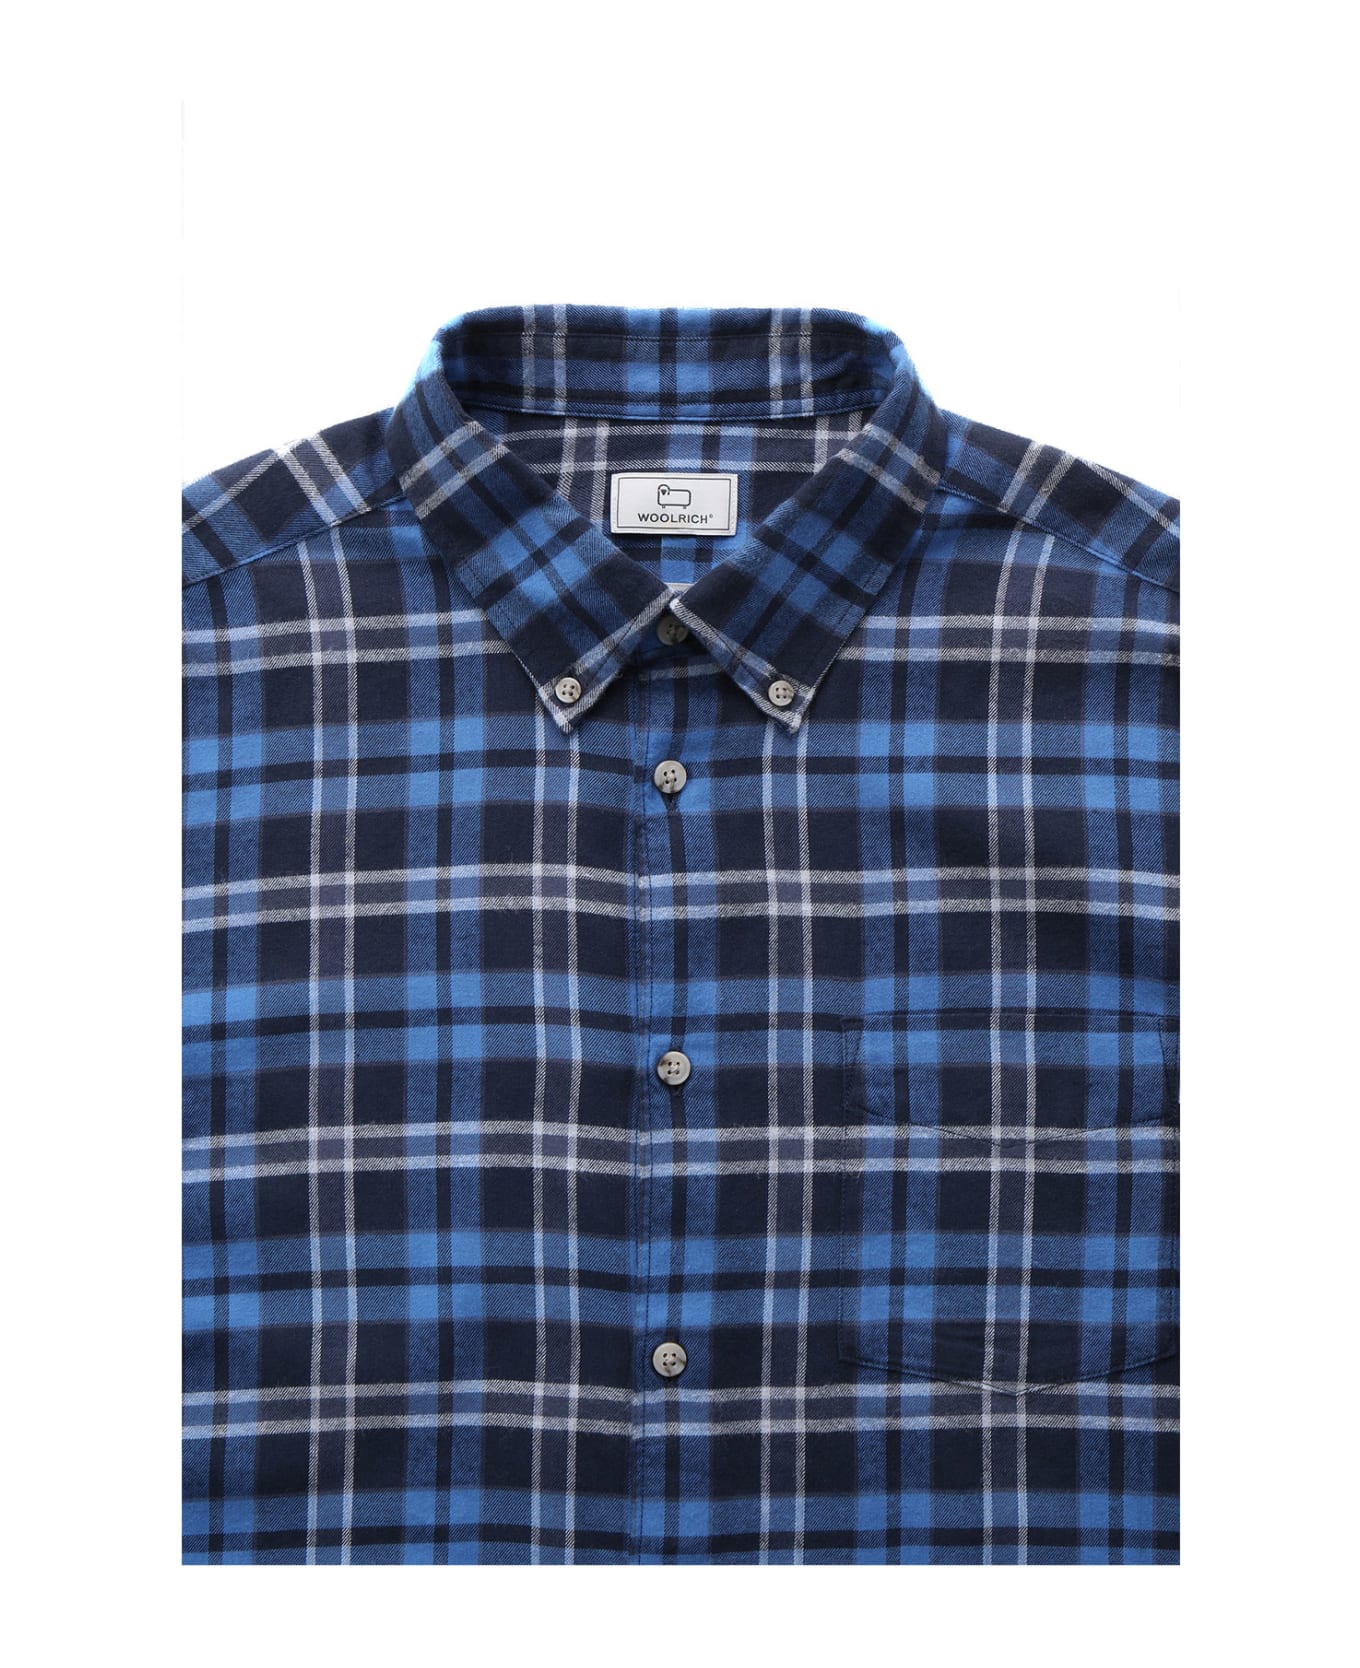 Woolrich Tweed Shirt - BLUE CHECK